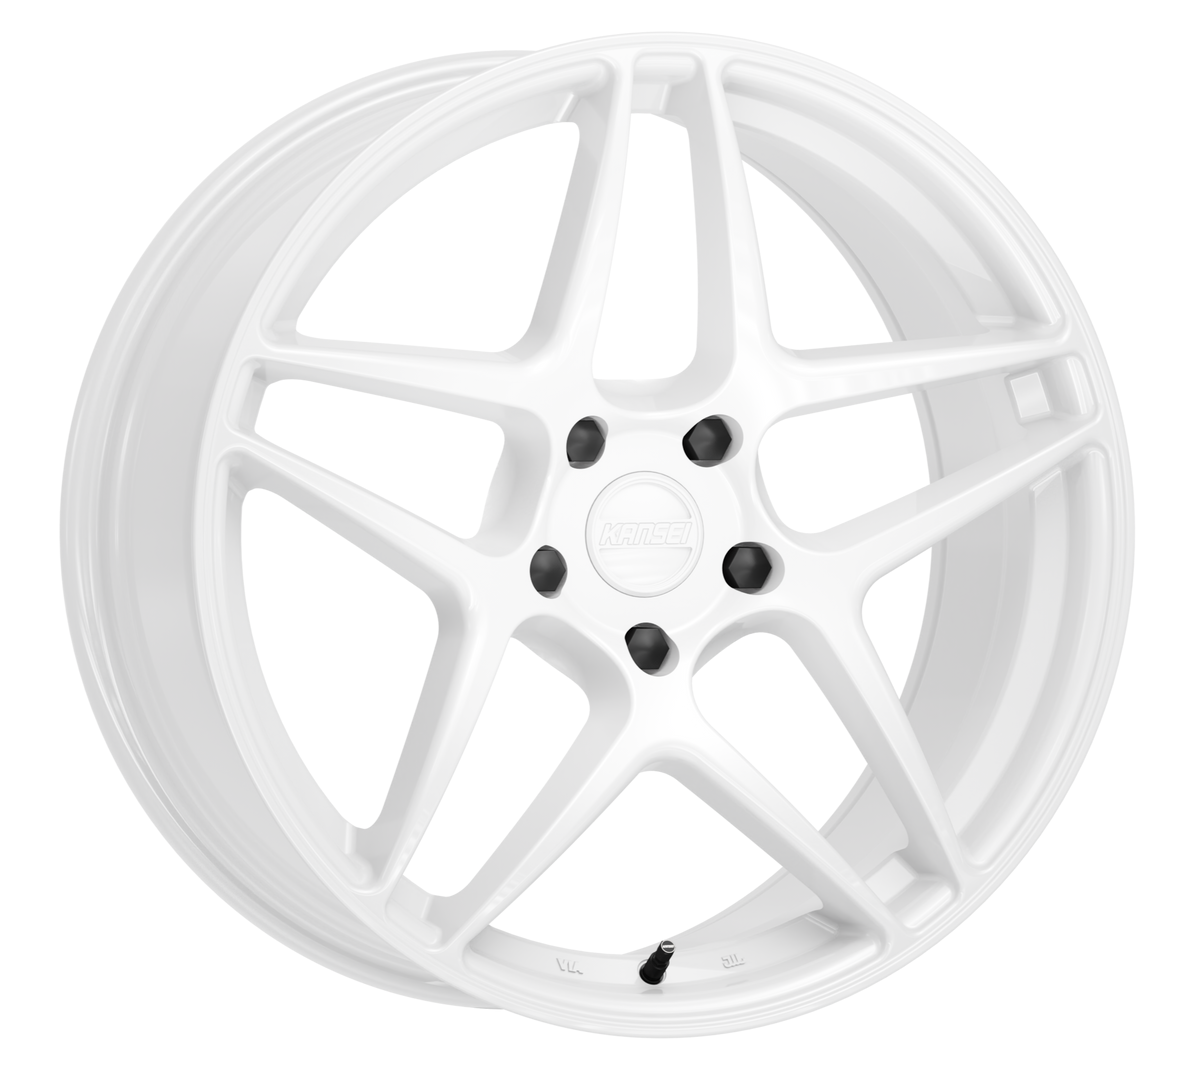 K15W ASTRO Wheel, Size: 19" x 9.50", Bolt Pattern: 5 x 120 mm, Backspace: 6.12" [Finish: Gloss White]